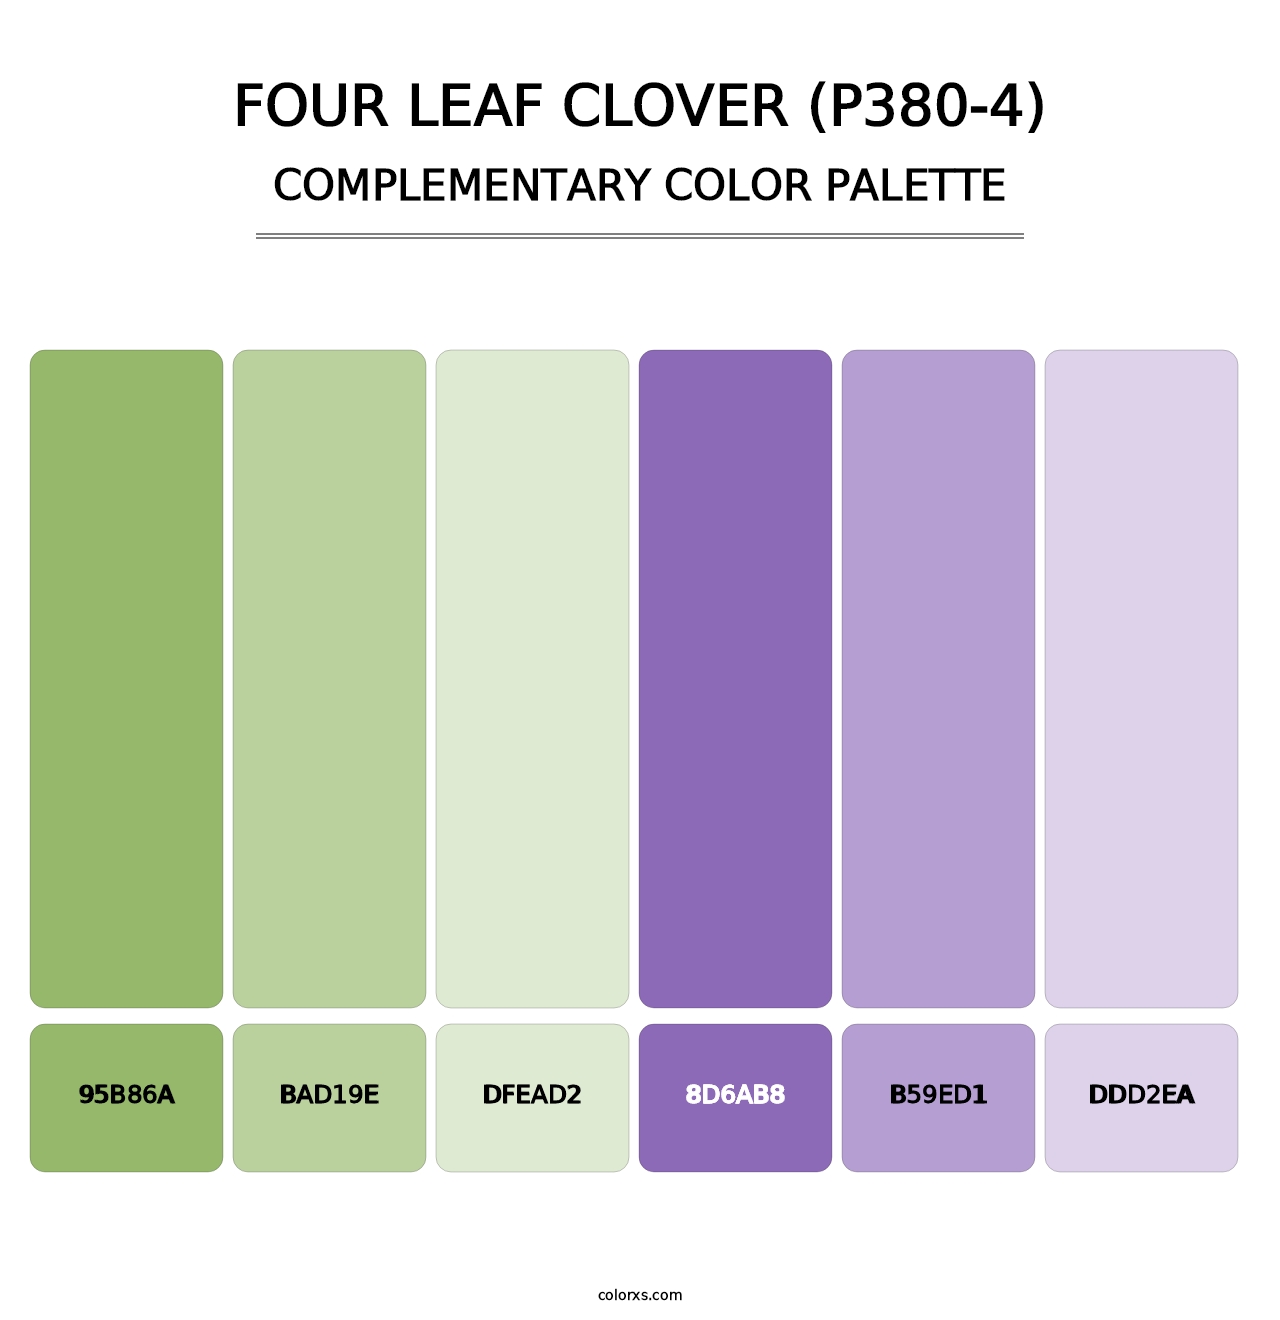 Four Leaf Clover (P380-4) - Complementary Color Palette